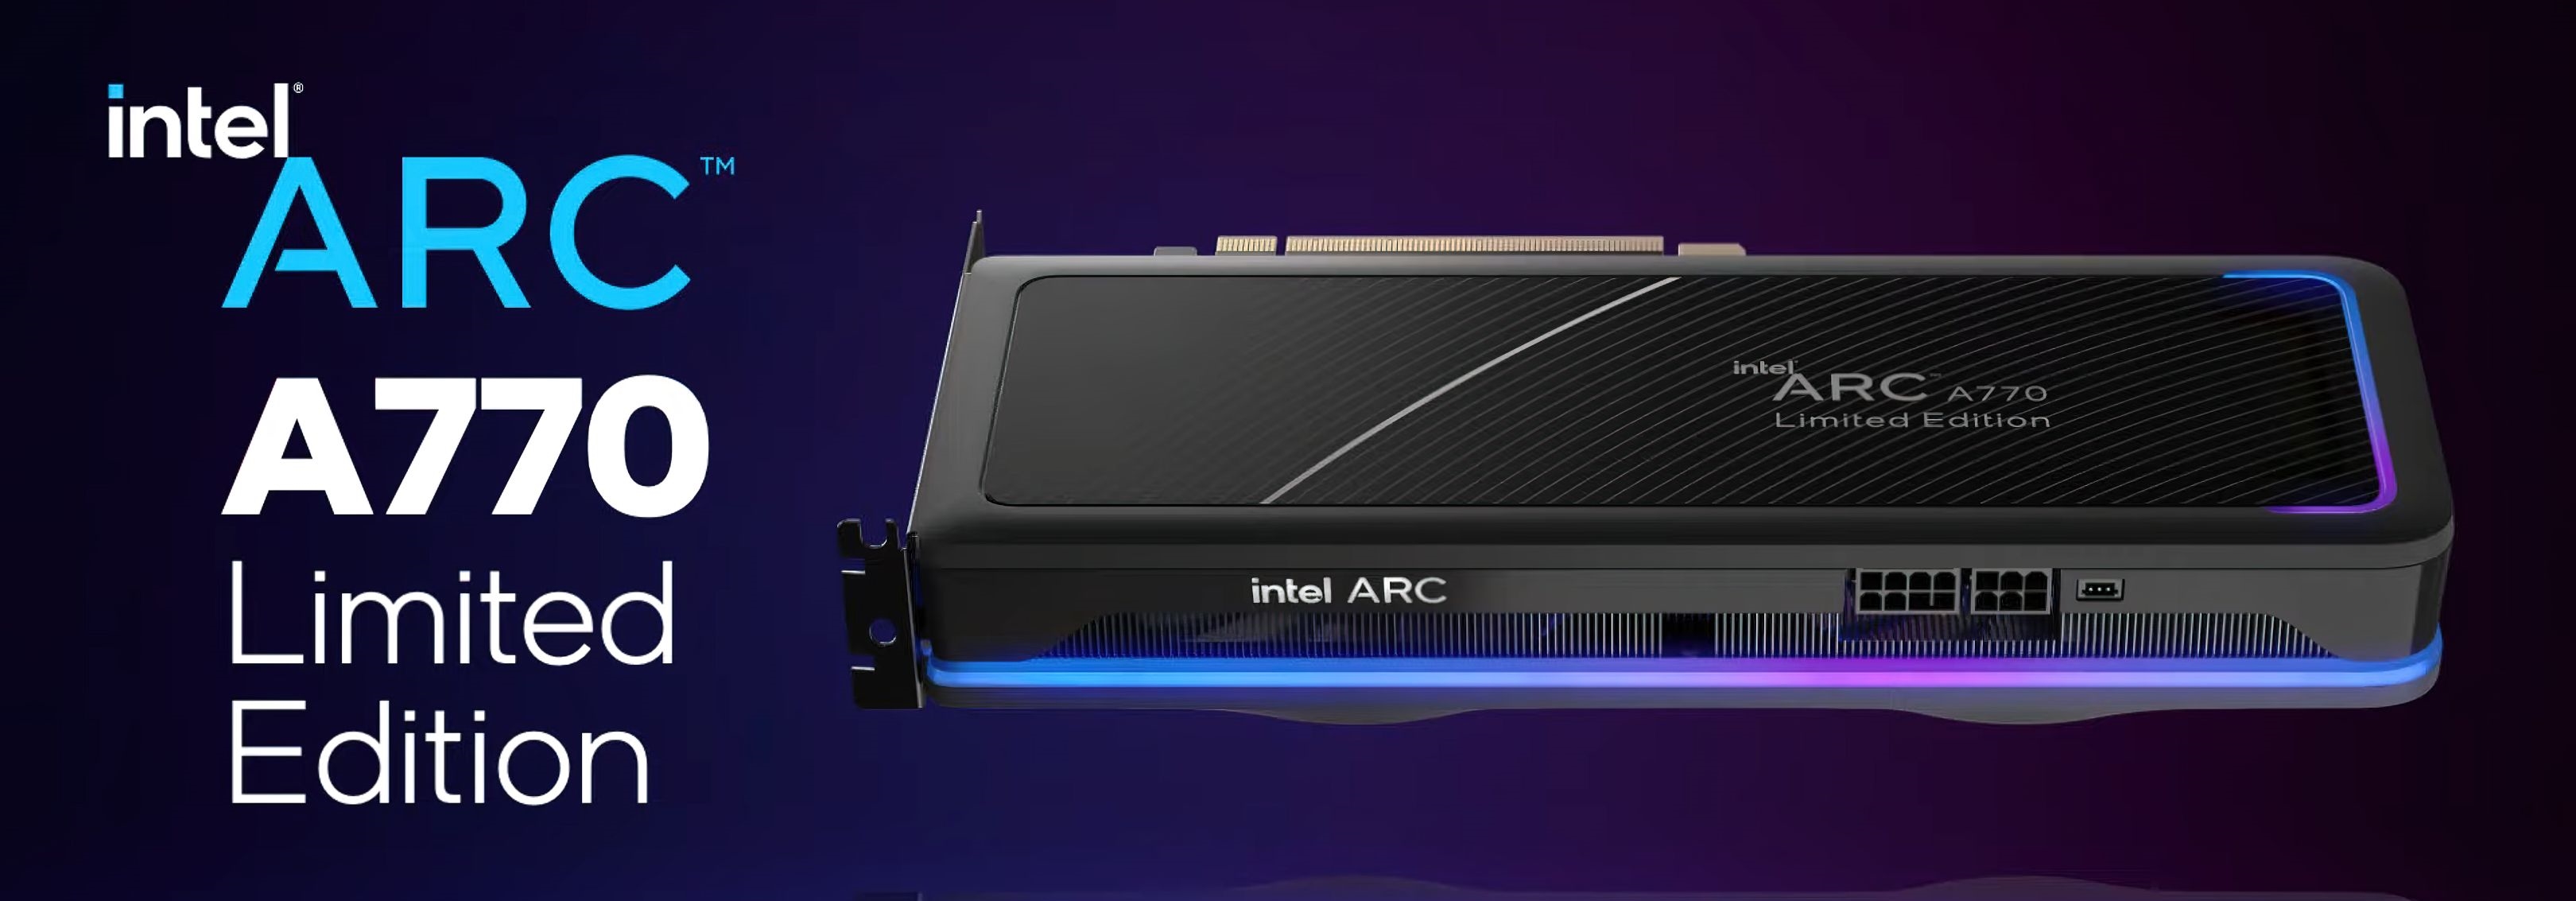 16GB显存！Intel Arc A770限量版旗舰显卡宣布停产退市